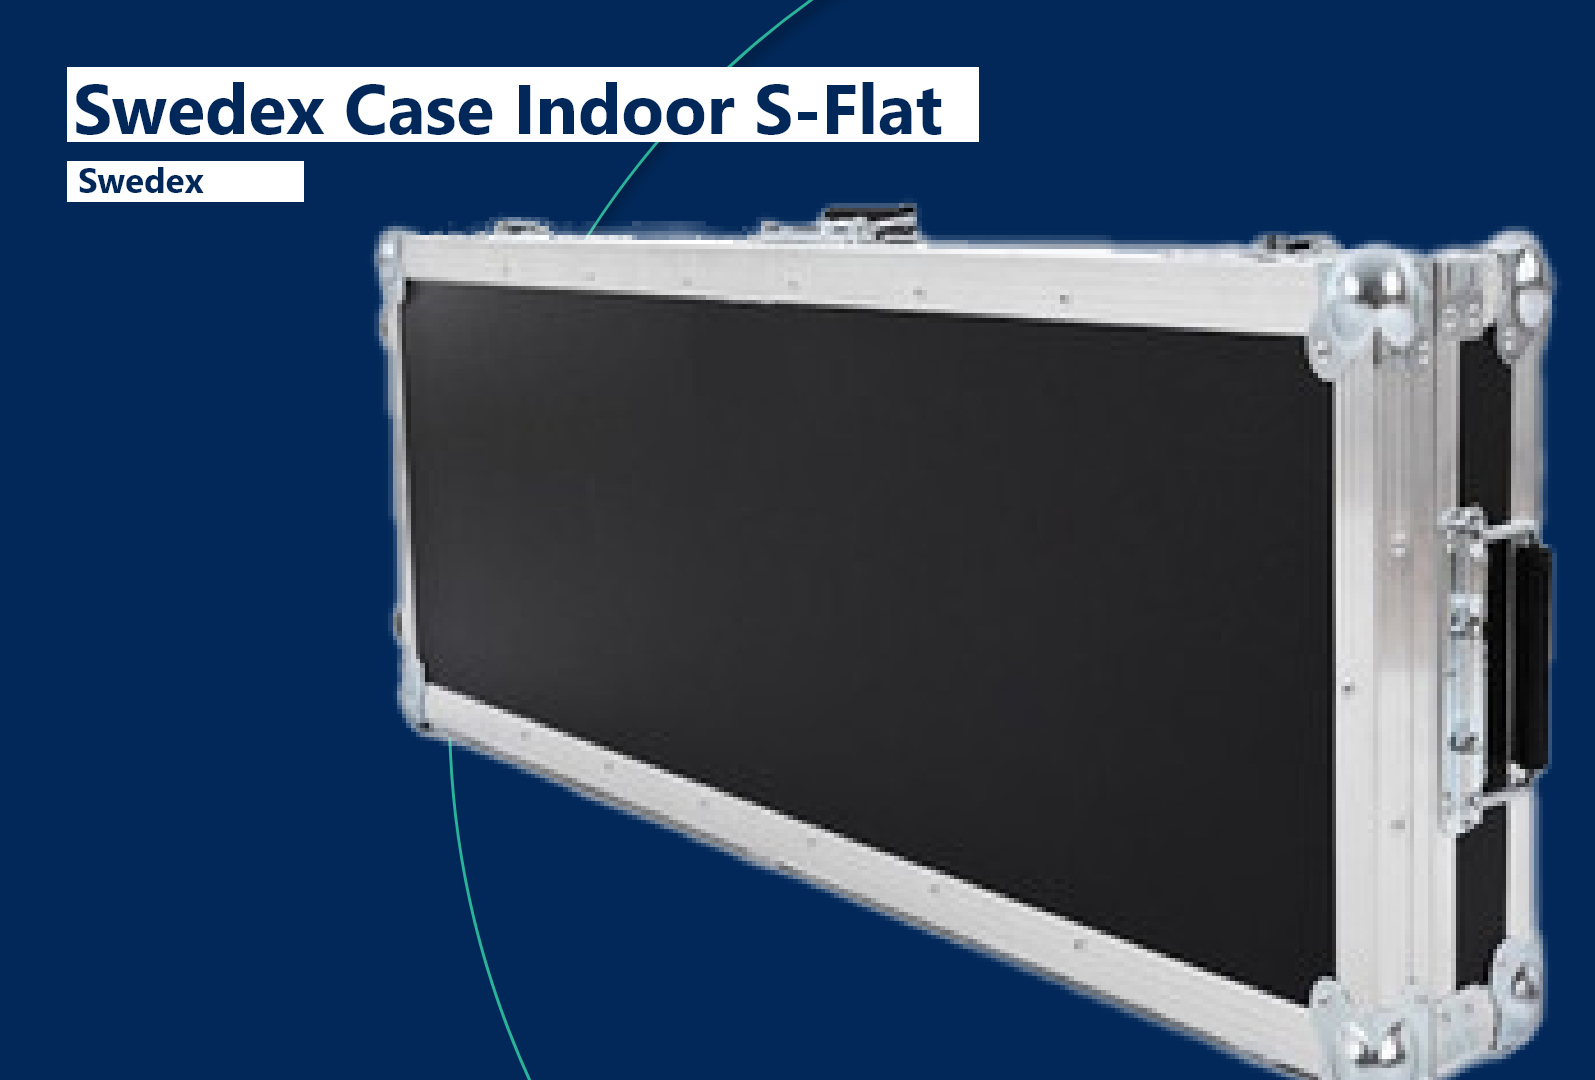 Swedex Case Indoor S-Flat